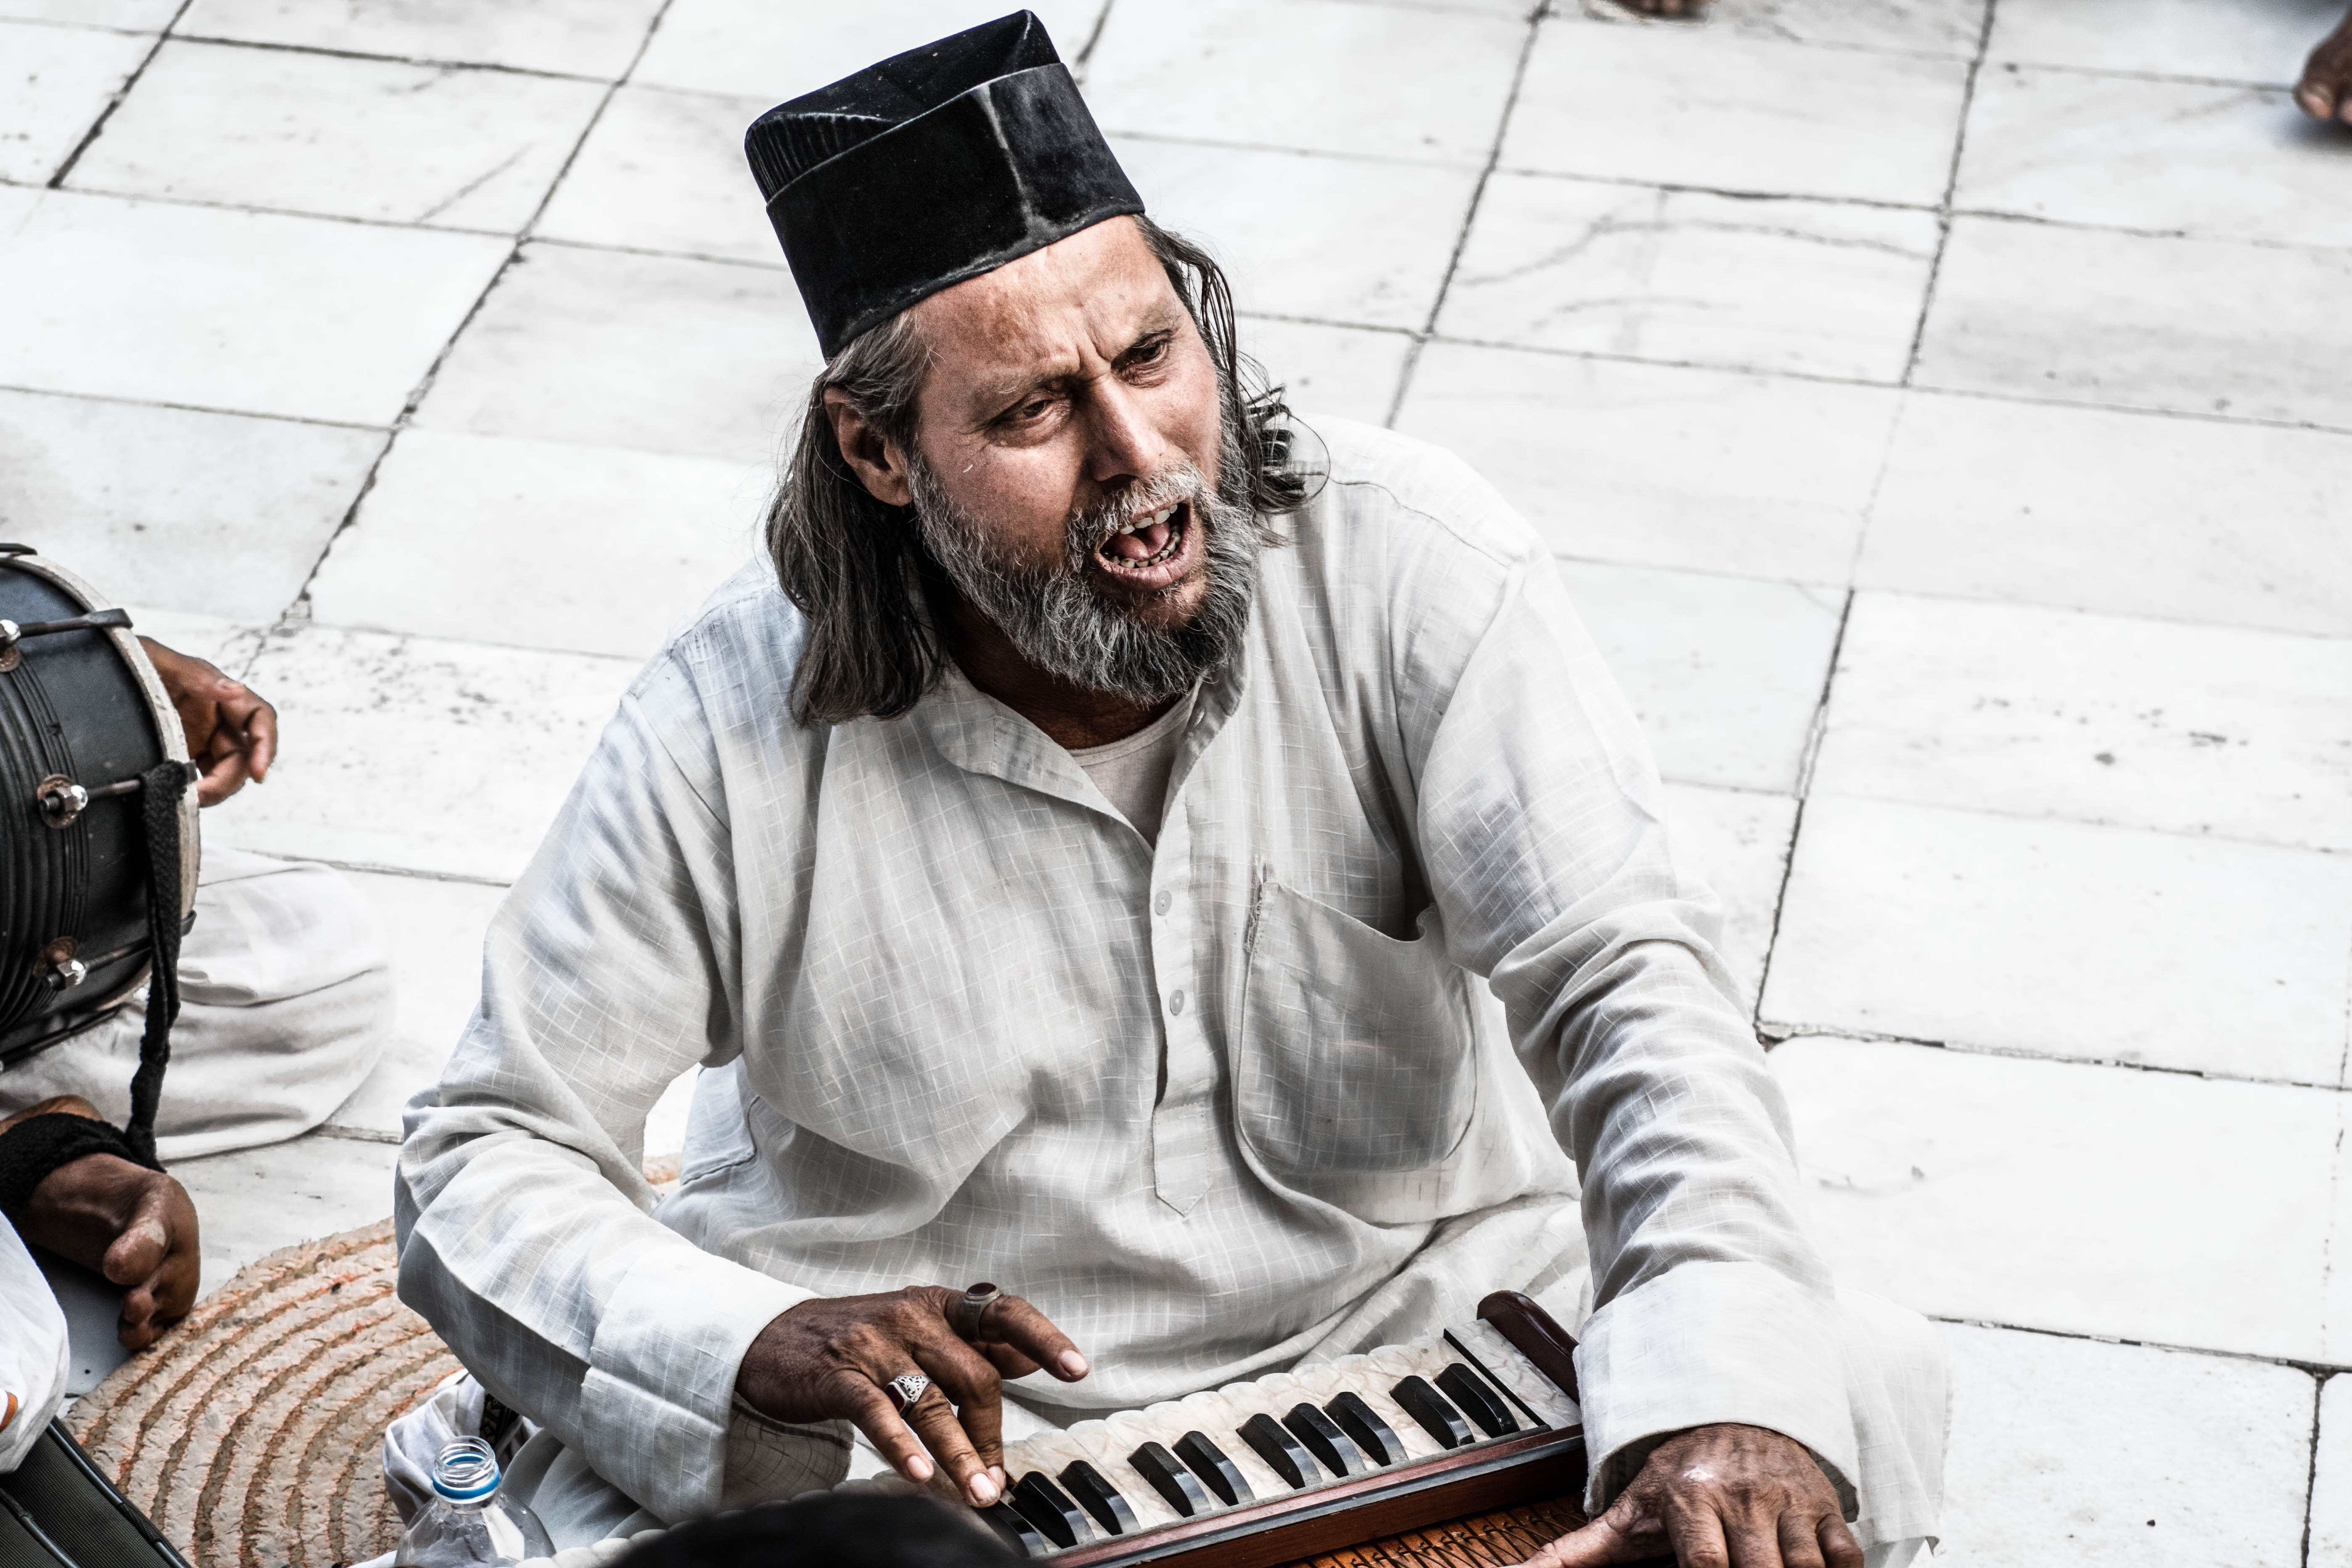 Man Sitting Holding Instrument, Facial hair, Instrument, Man, Musical instrument, HQ Photo